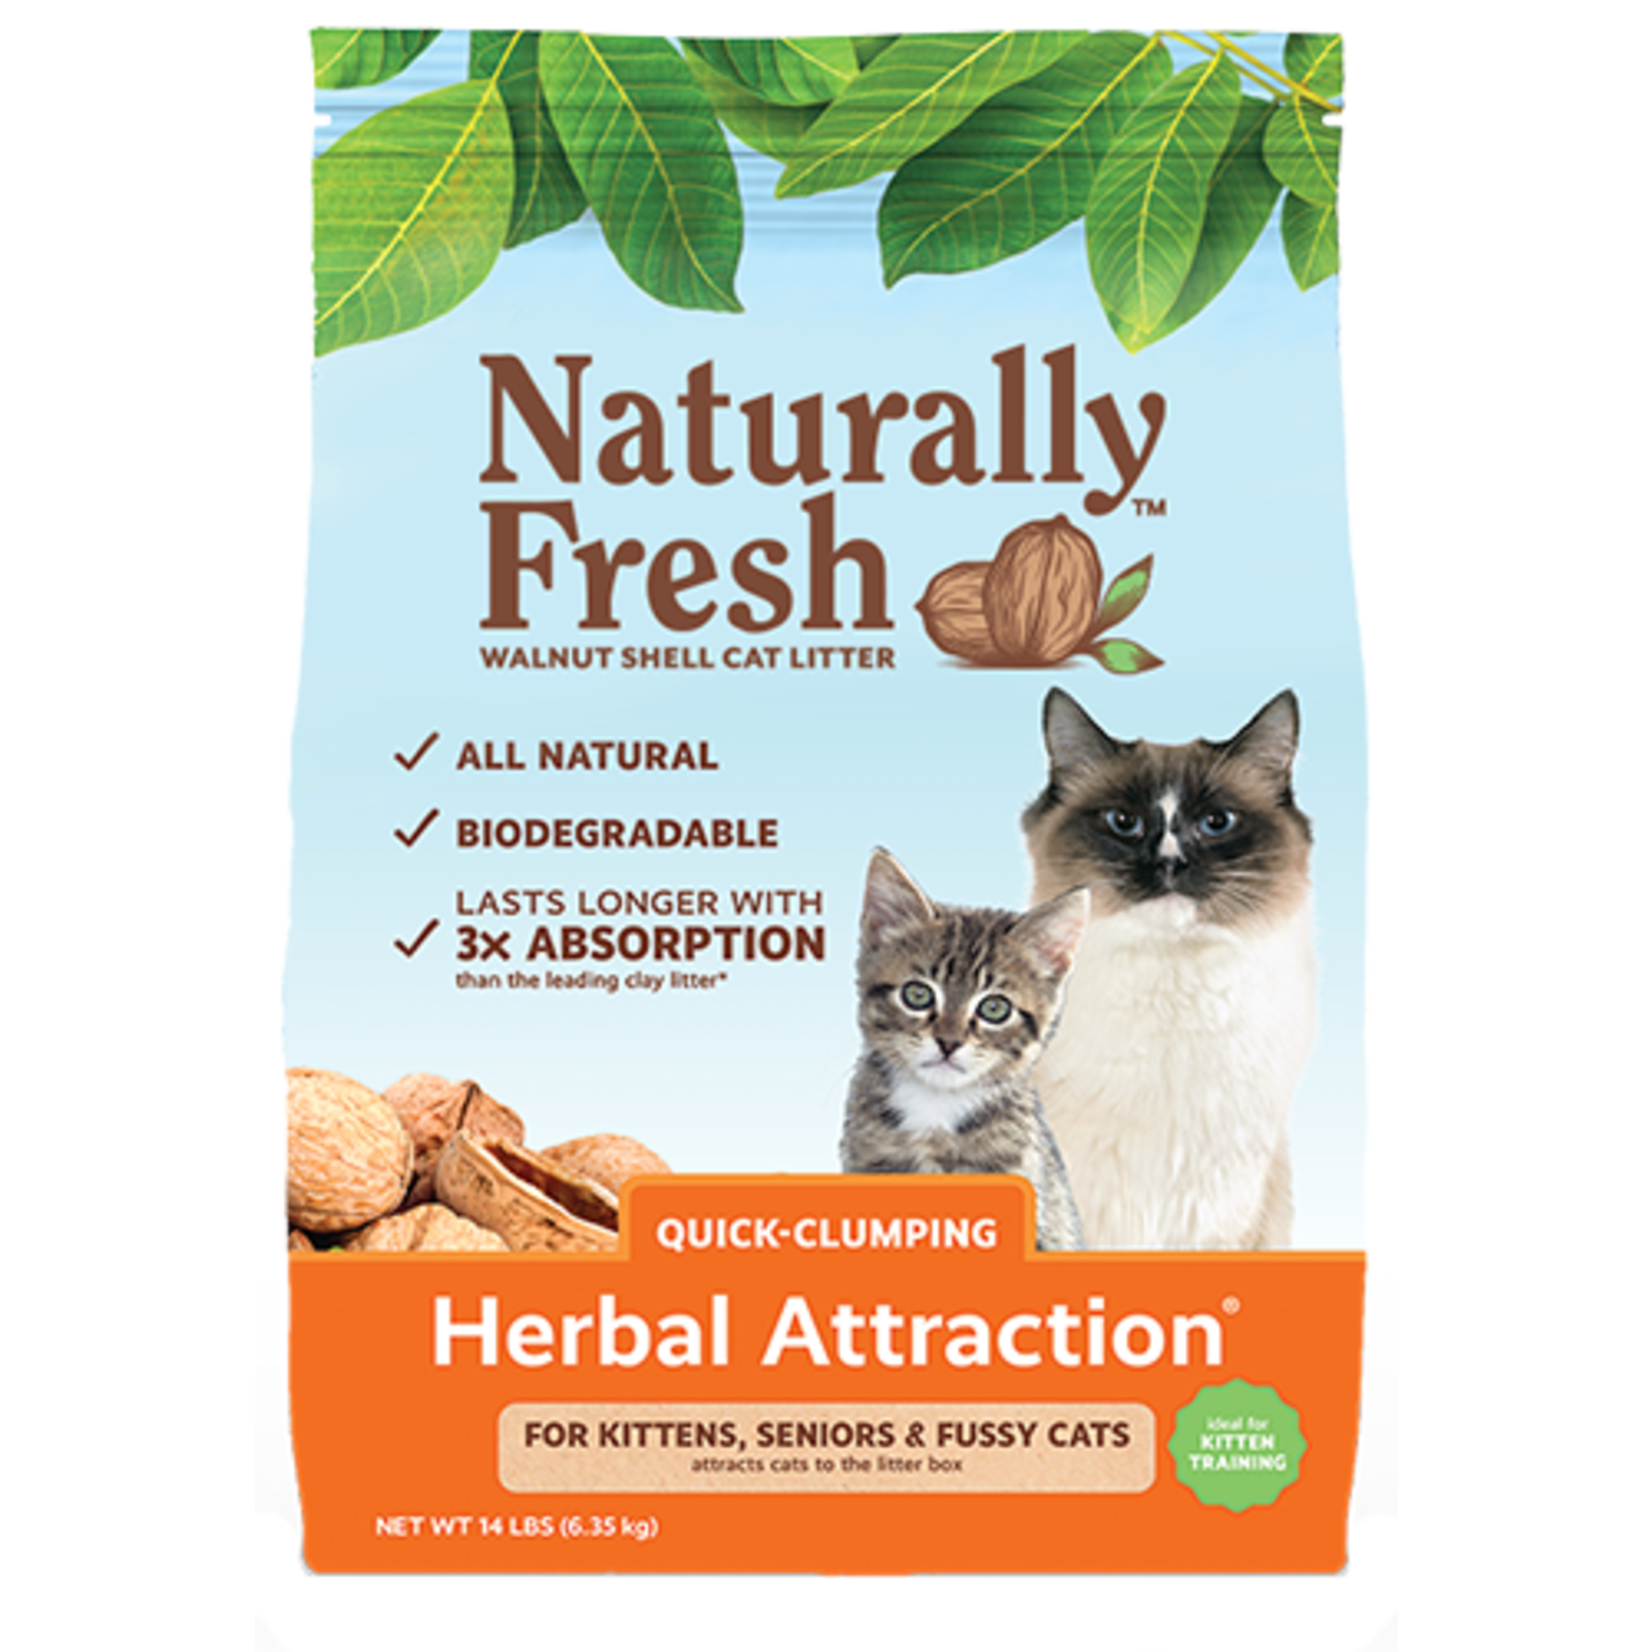 Naturally Fresh Litter Naturally Fresh Walnut Shell Litter - Herbal Attraction